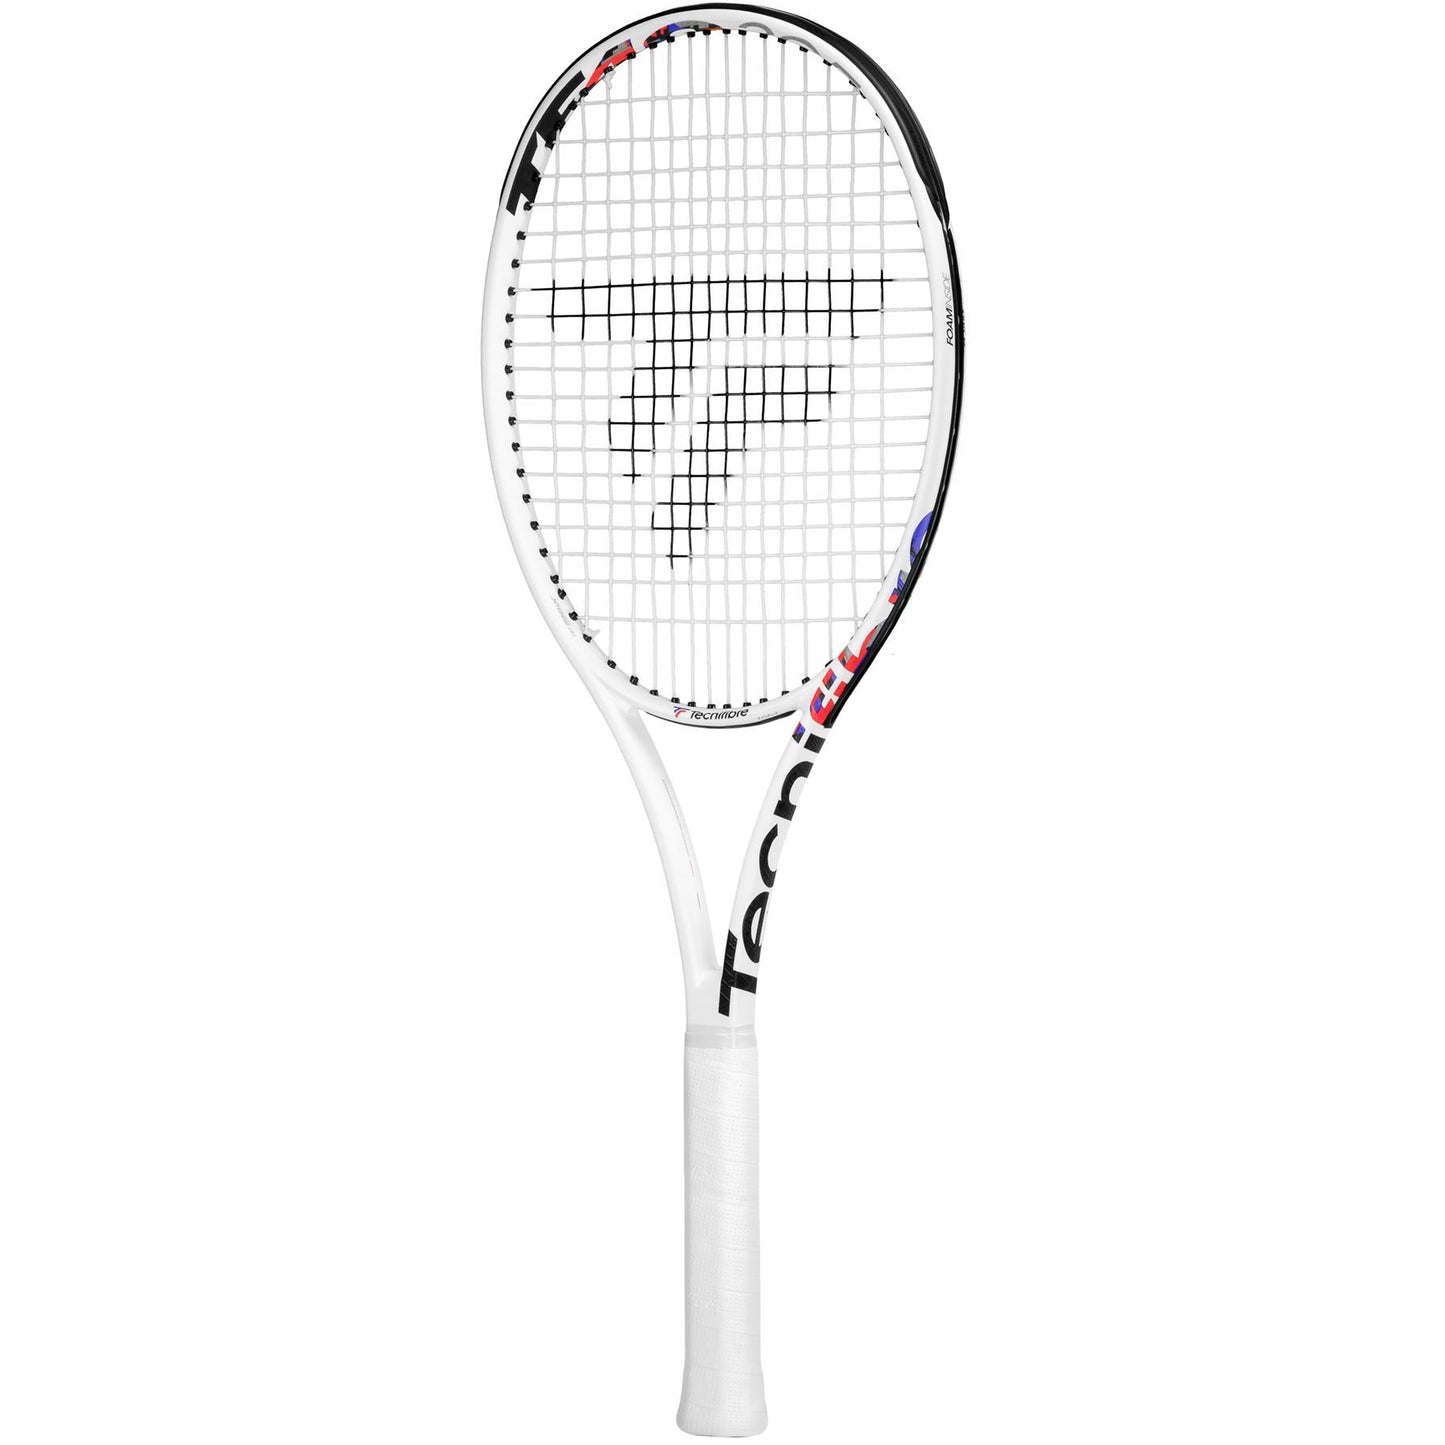 Tecnifibre TF40 305 16x19 Tennis Racket - White (Frame Only)